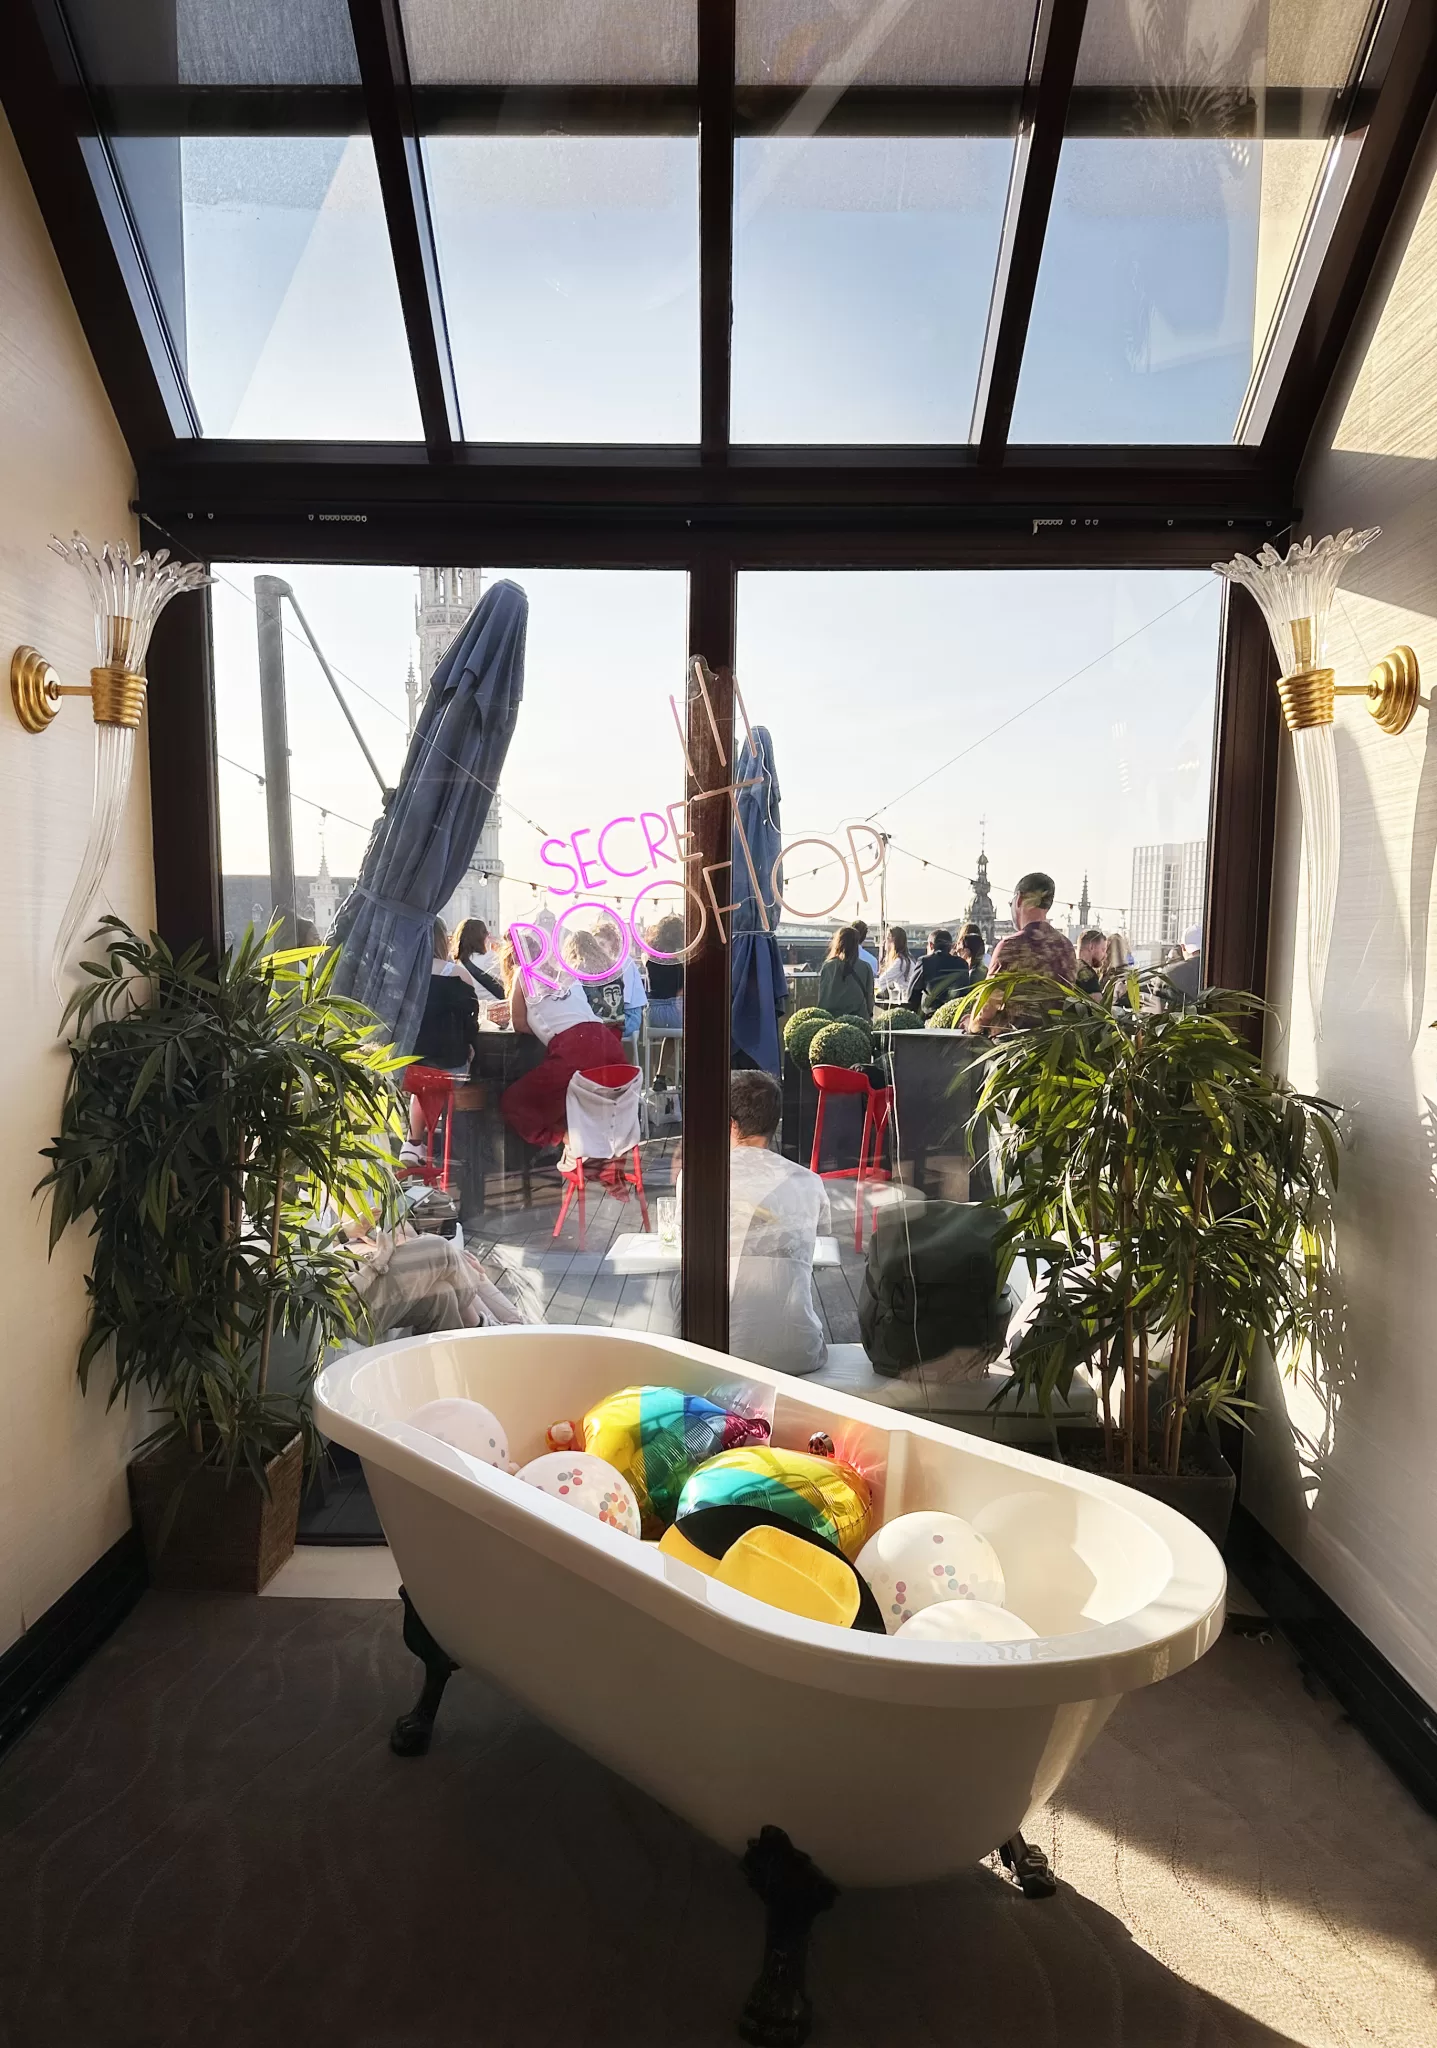 Bathtub decor at the Secret Rooftop Bar Brussels